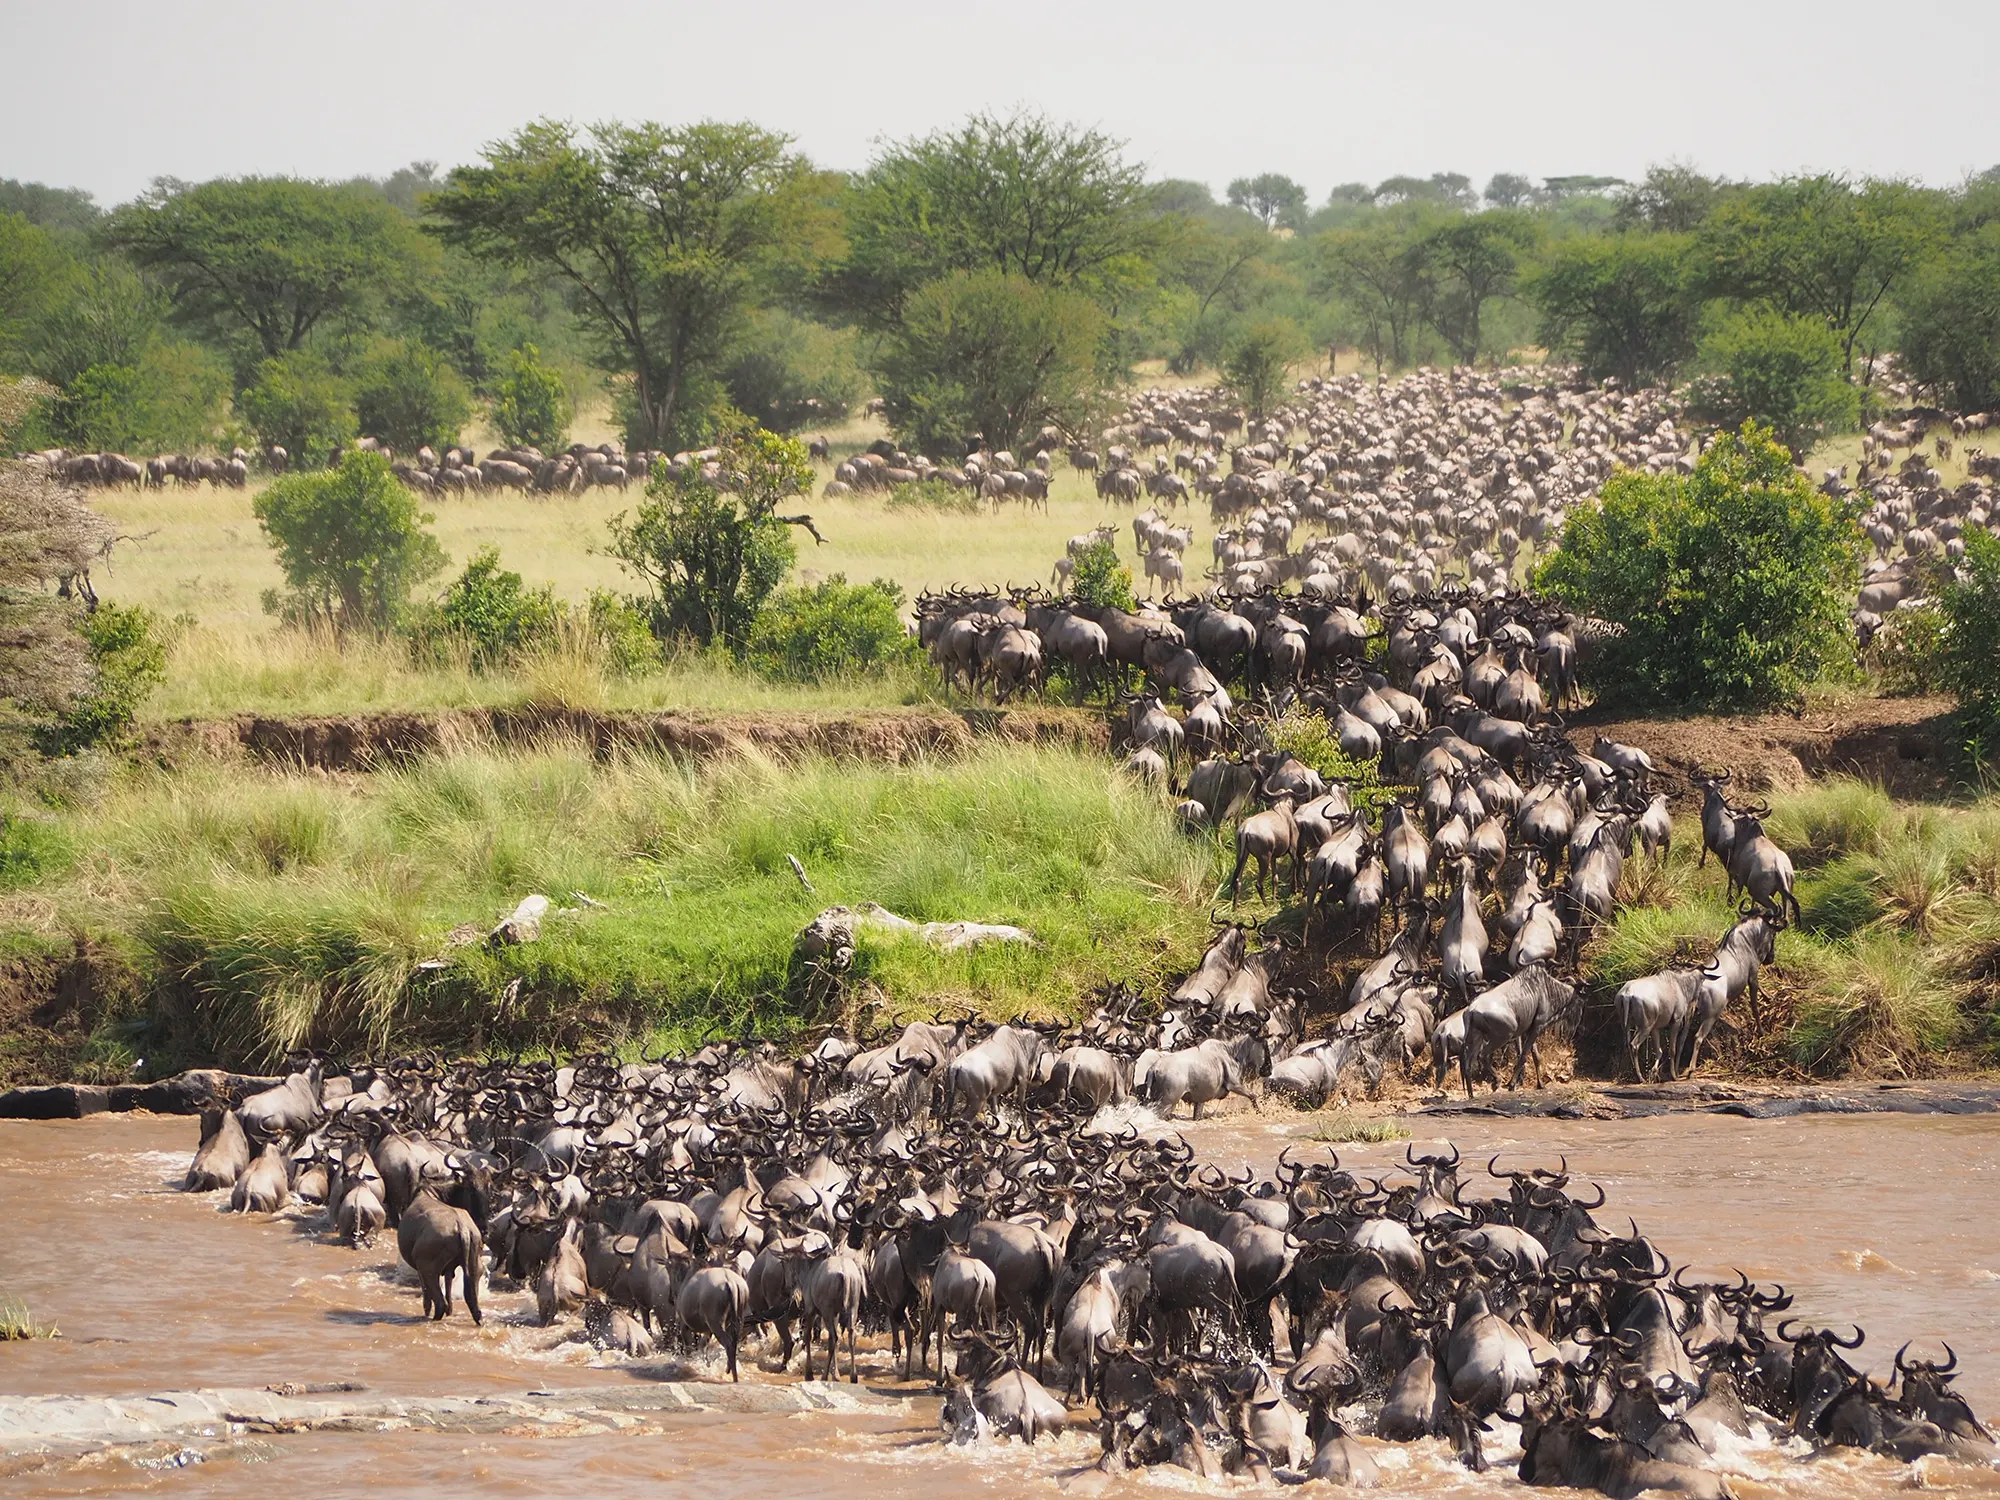 Safari in Kenia - Masai Mara National Reserve